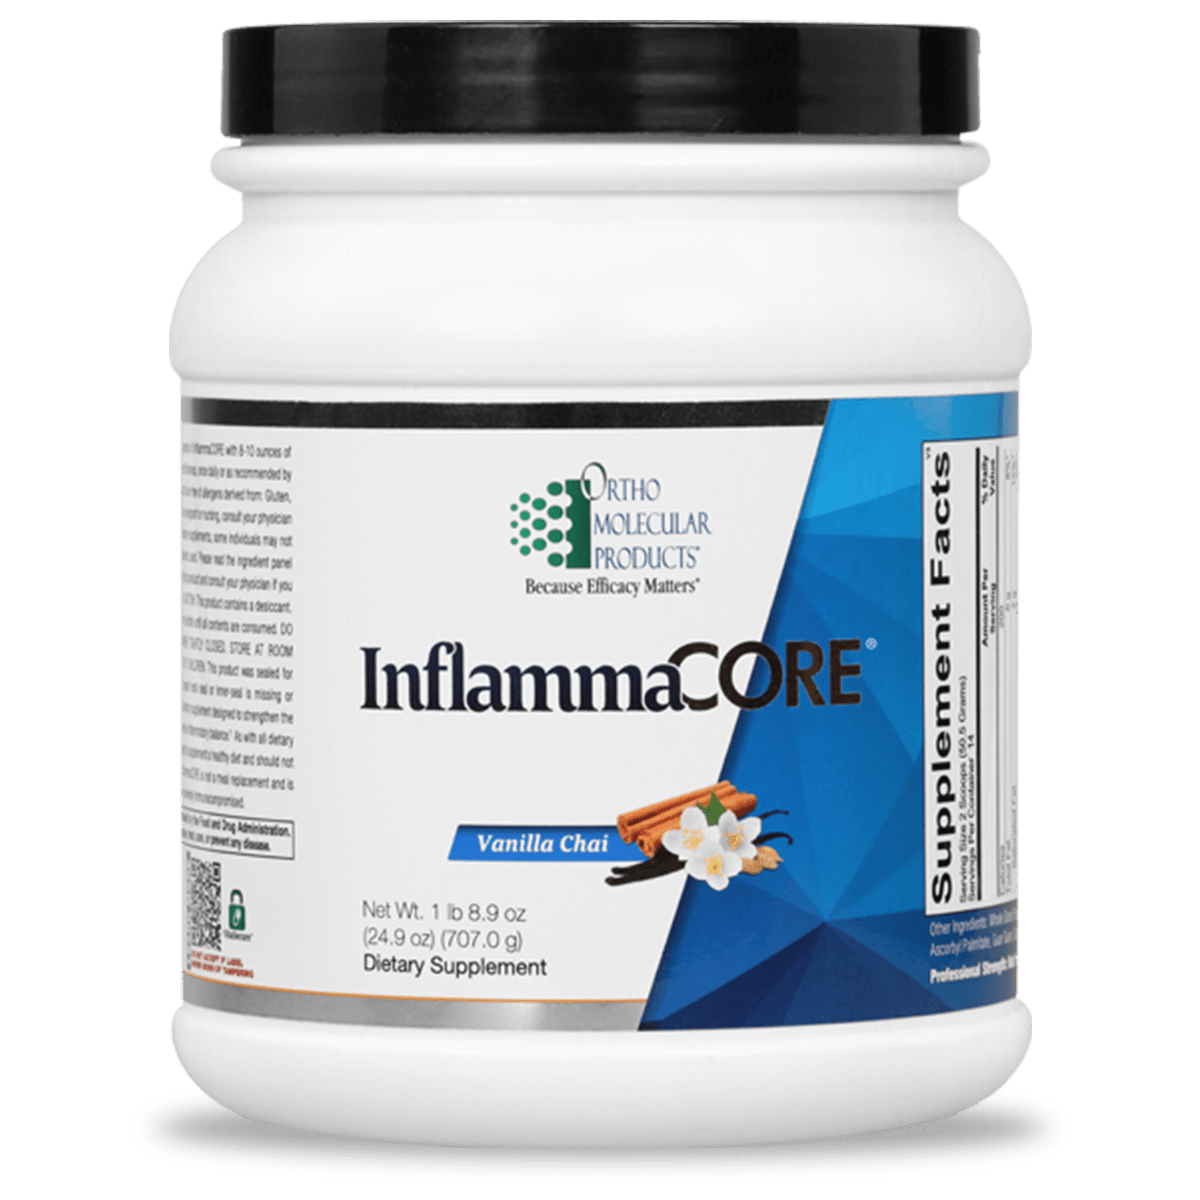 InflammaCORE Vanilla Chai (671) product image